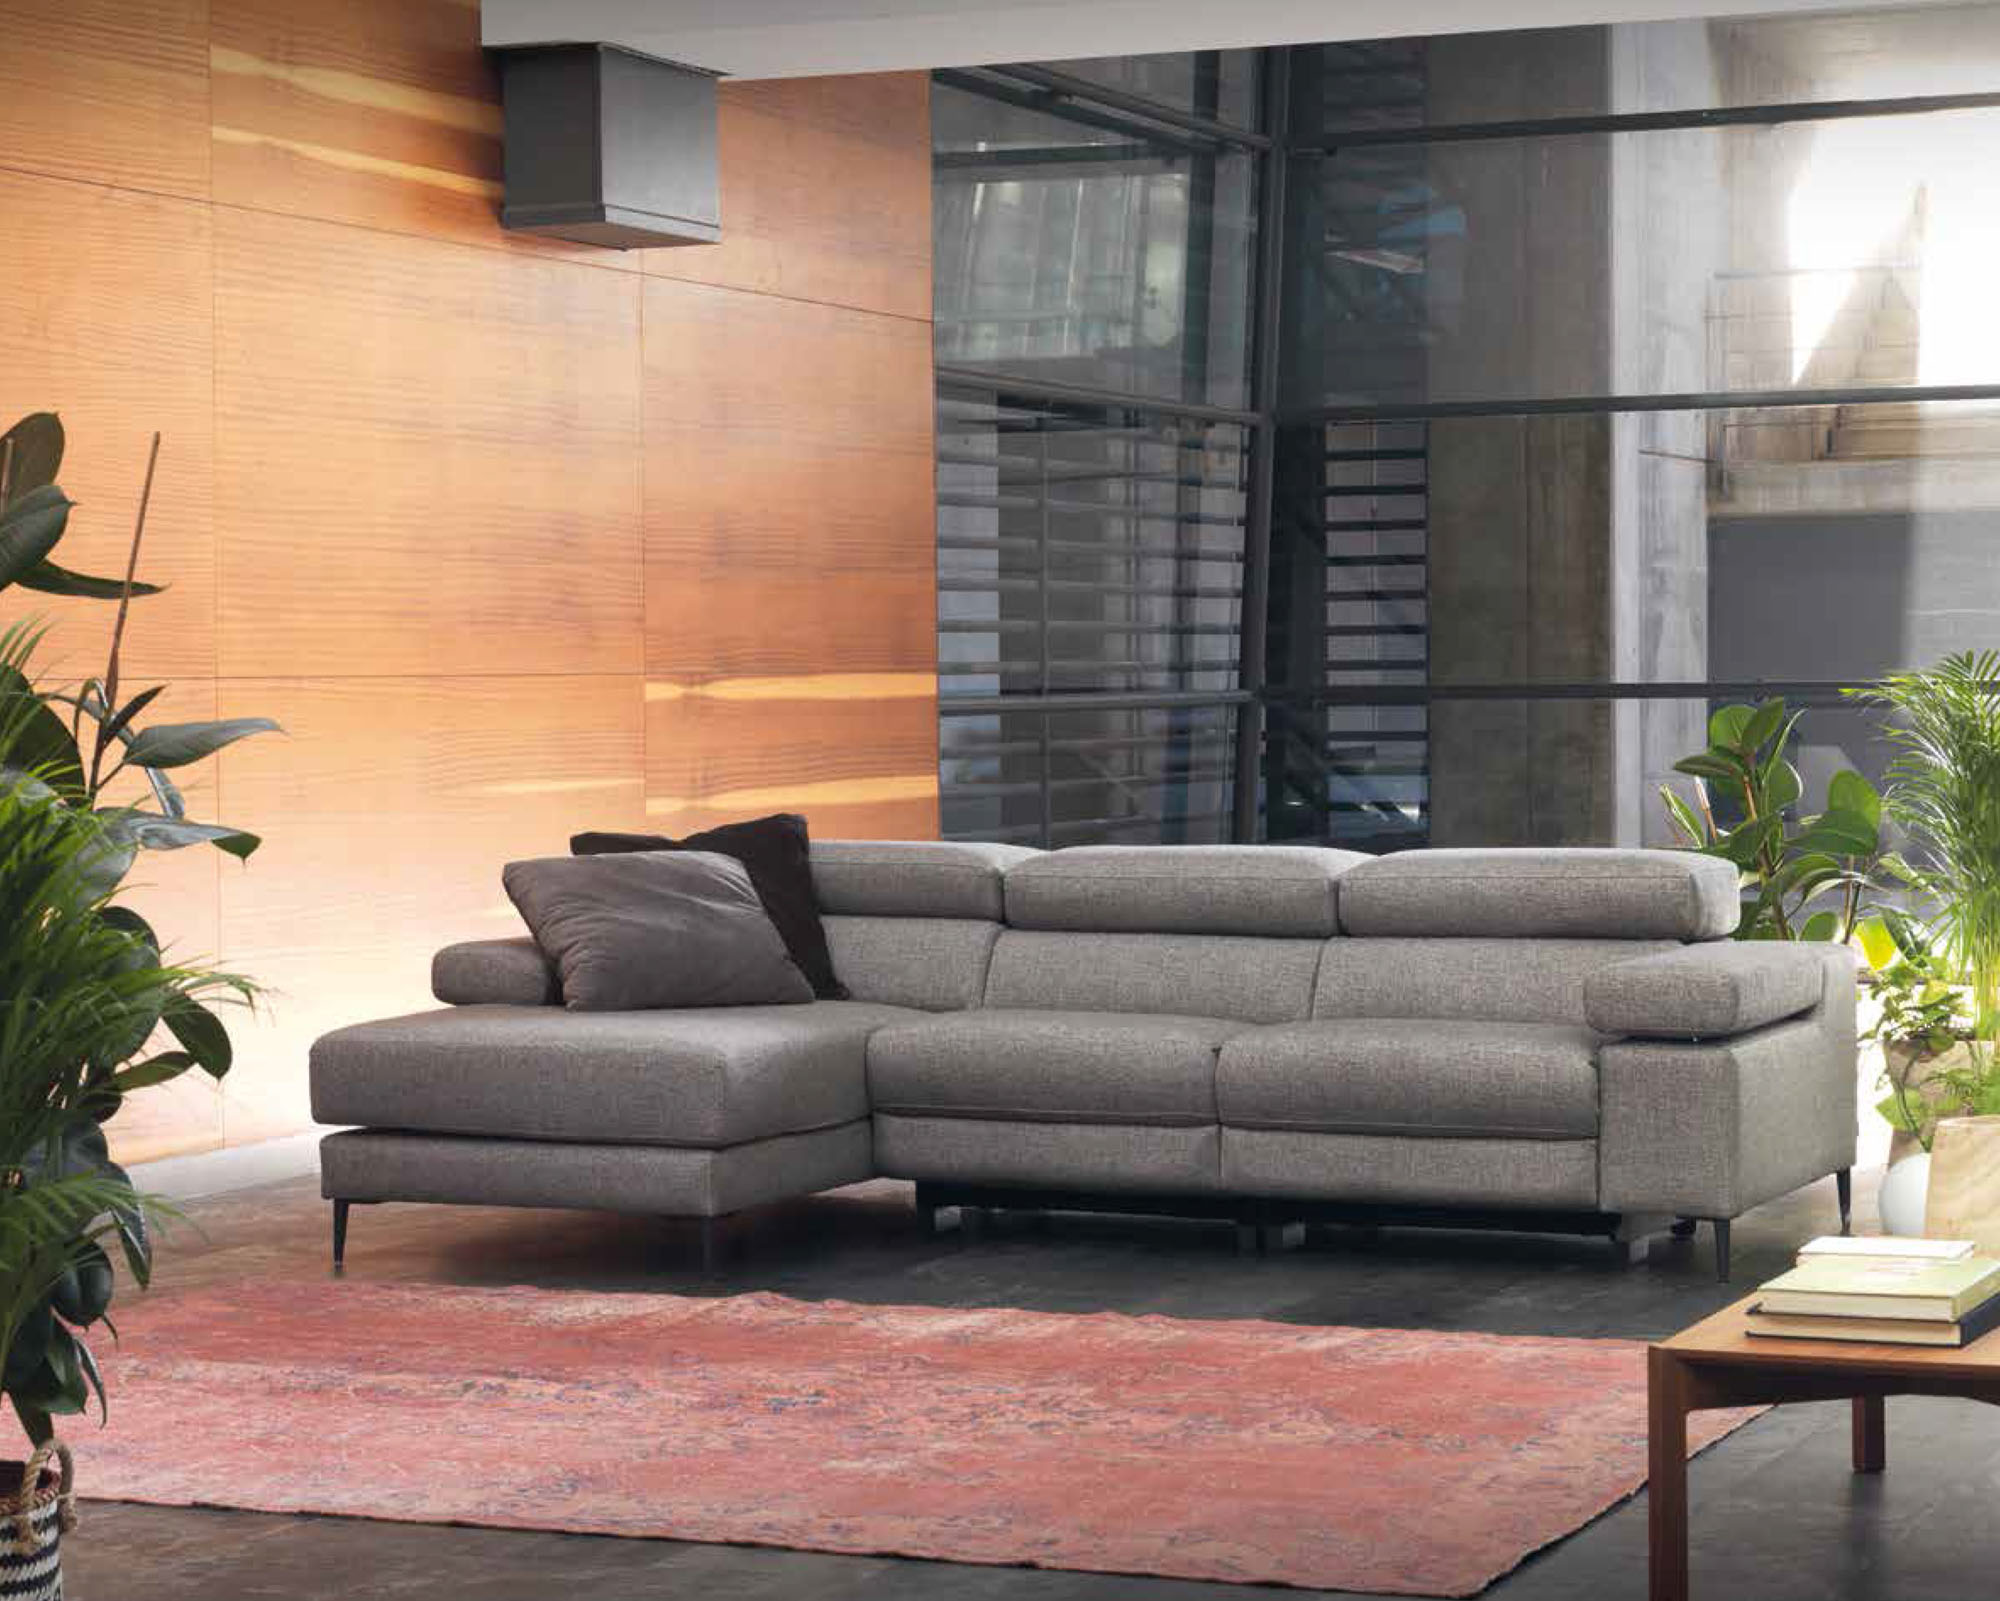 Sofa relax eléctrico - Arin y Embil : Arin y Embil